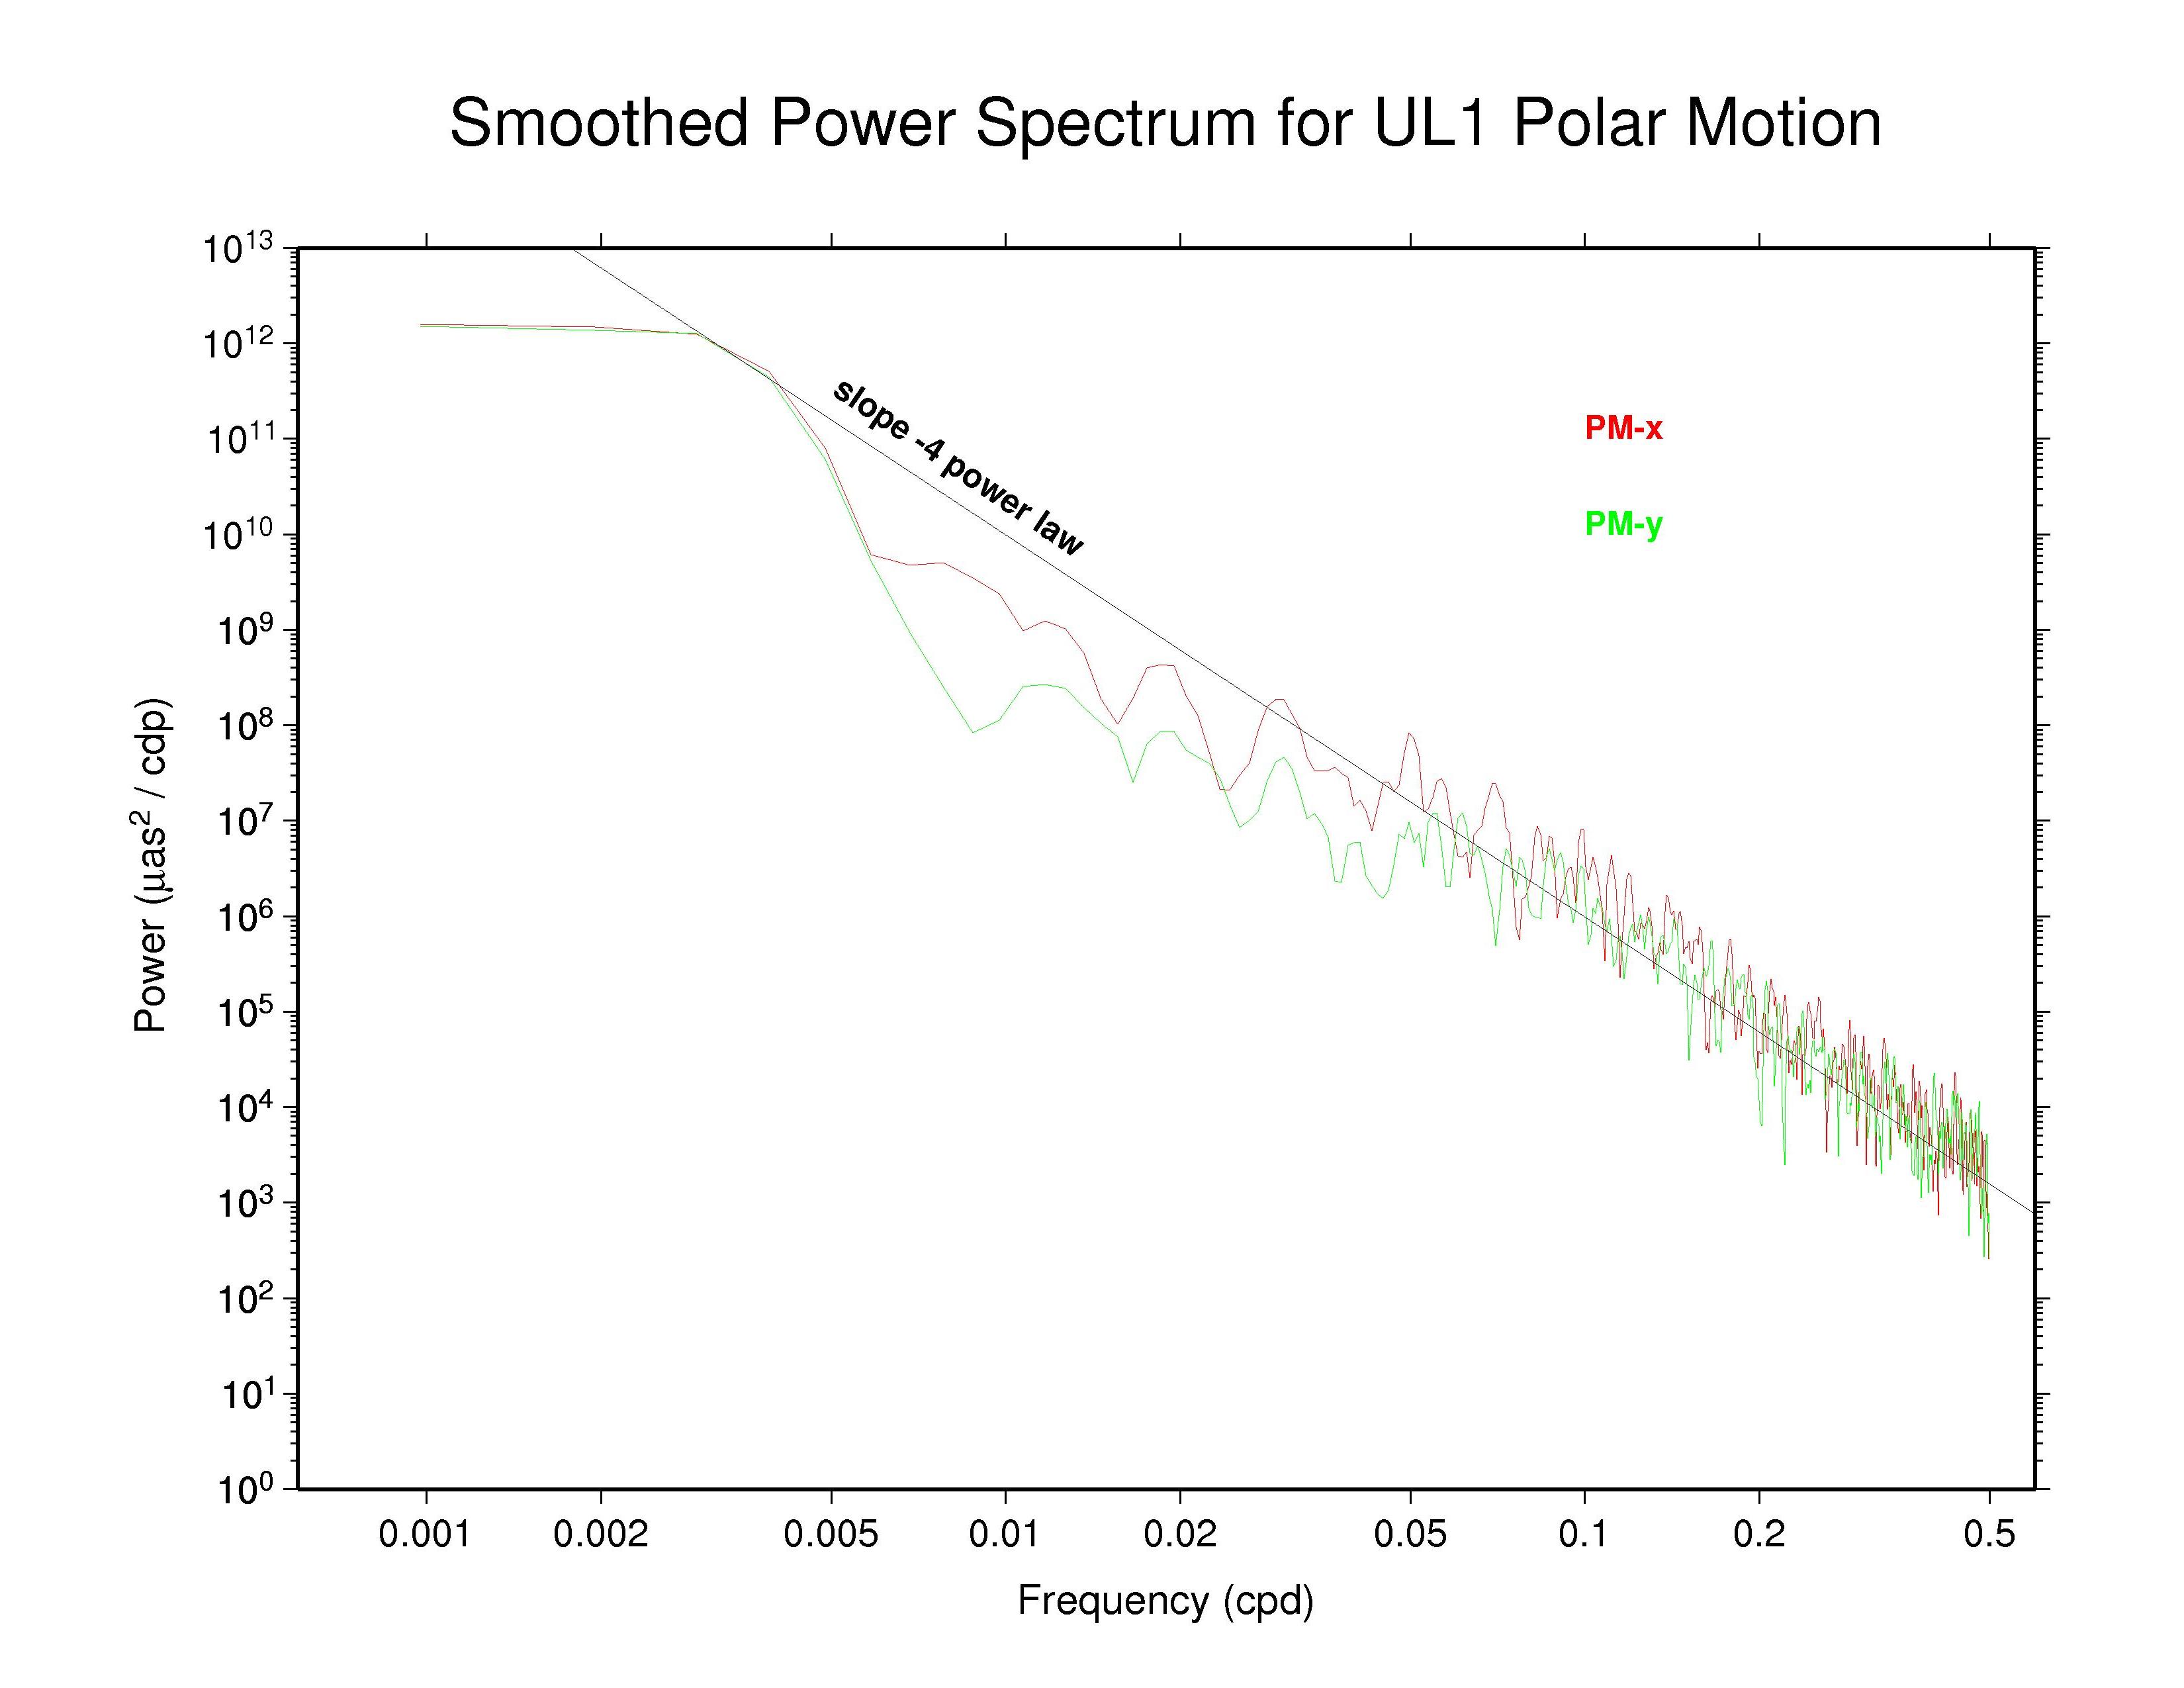 ULR polar motion spectra